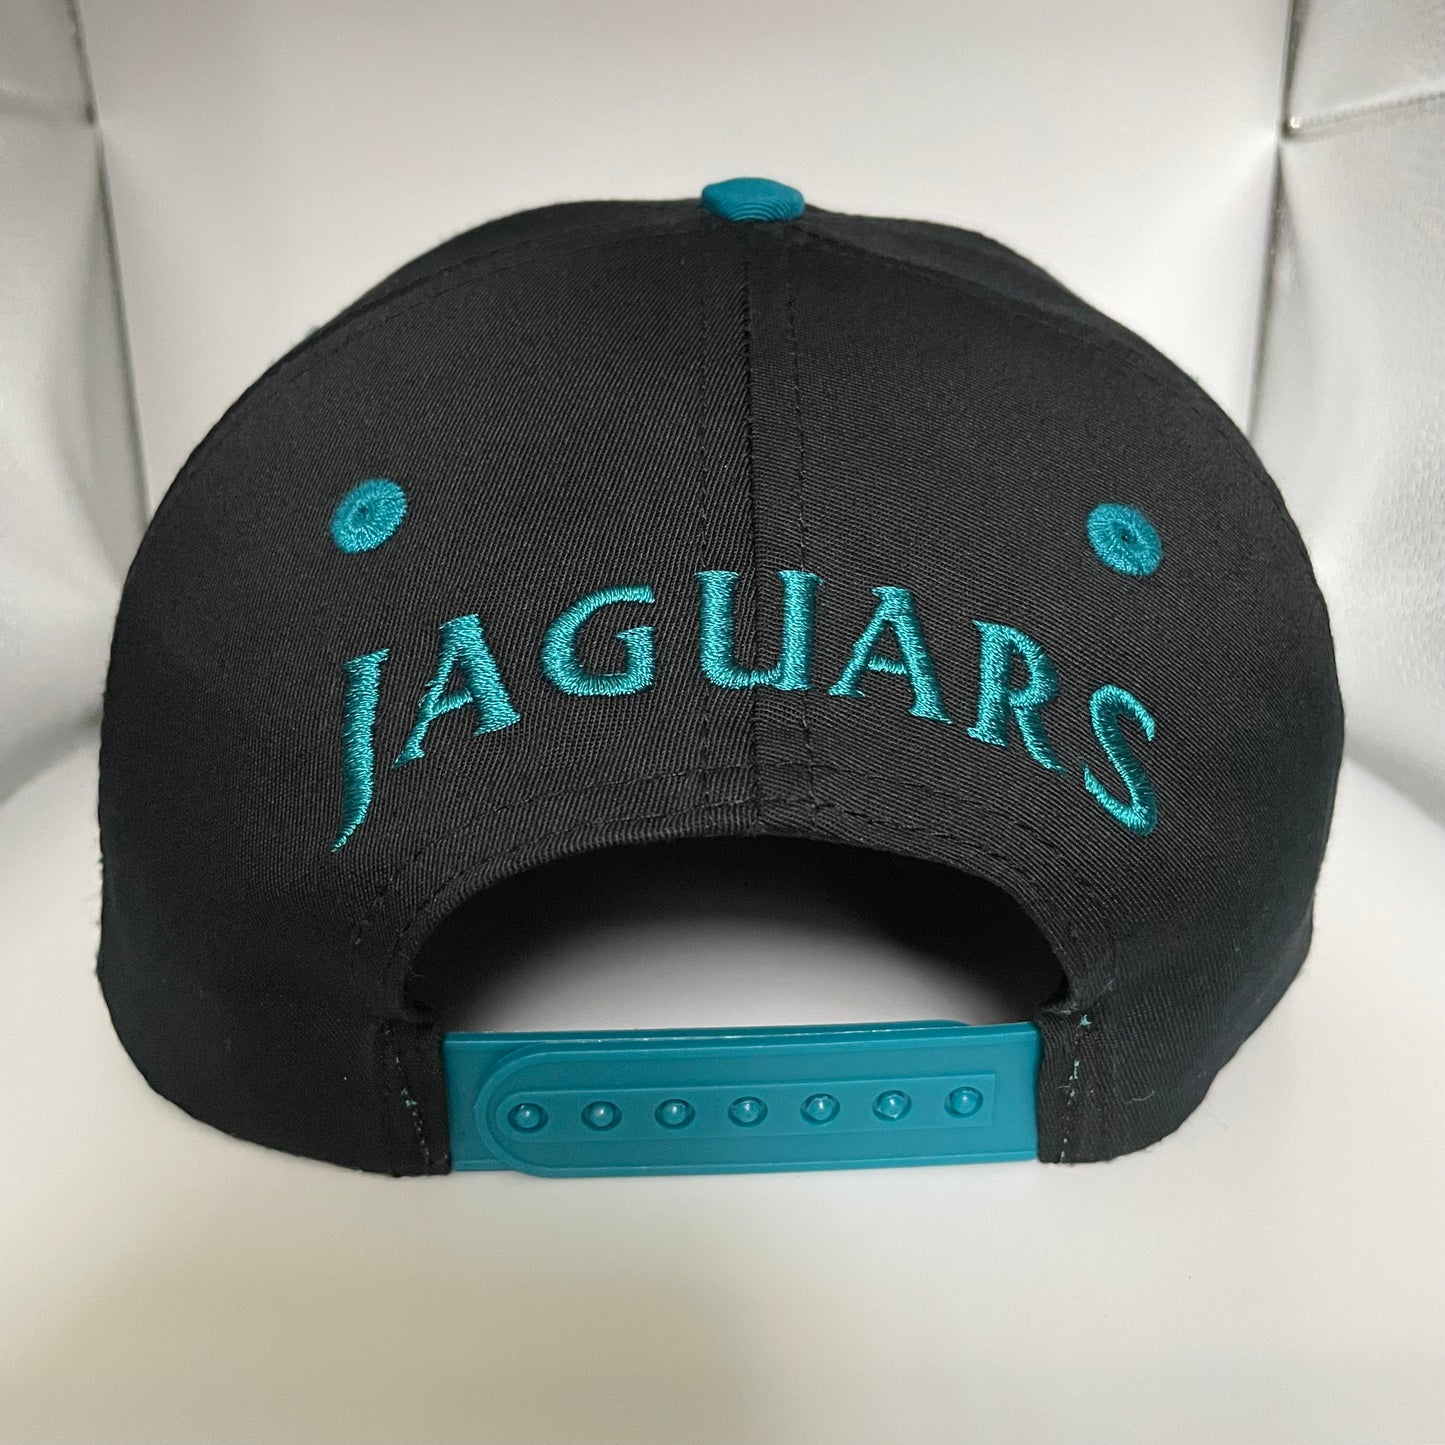 Vintage Jacksonville Jaguars hat